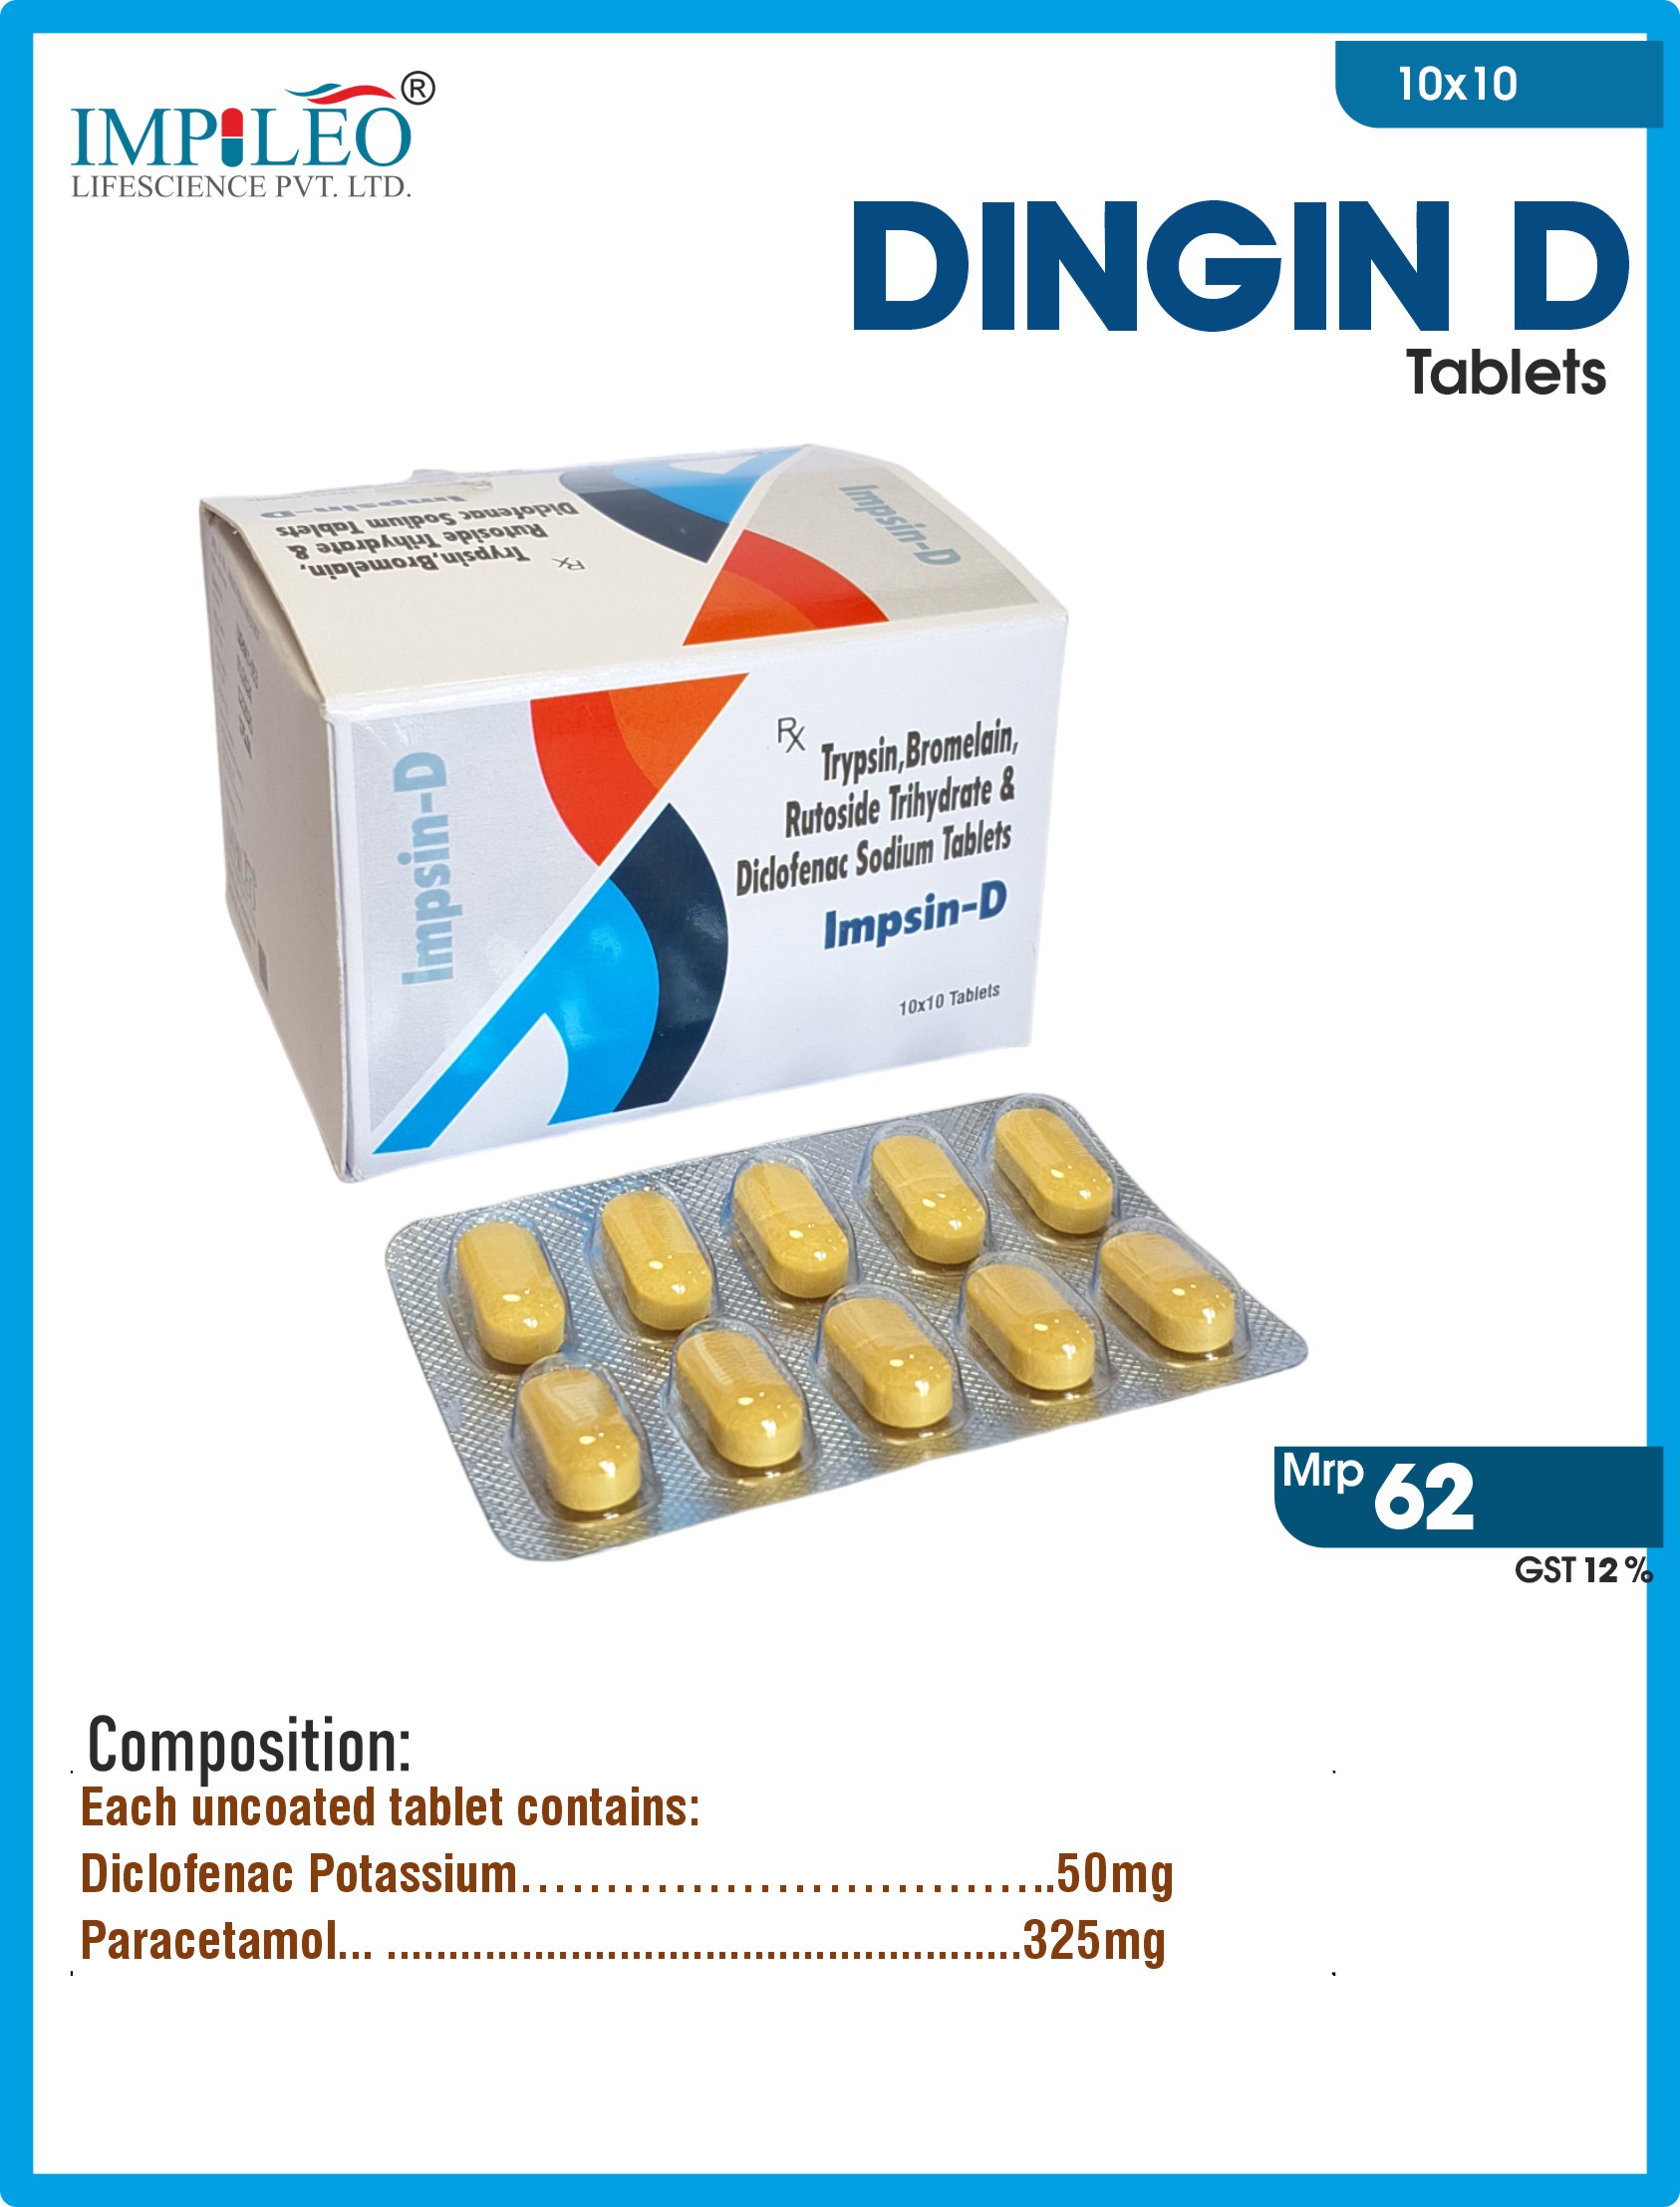 Peak Wellness Unveiled : Premium DINGIN-D ™ (Diclofenac Potassium & Paracetamol) Tablets by Top Third-Party Manufacturer in India